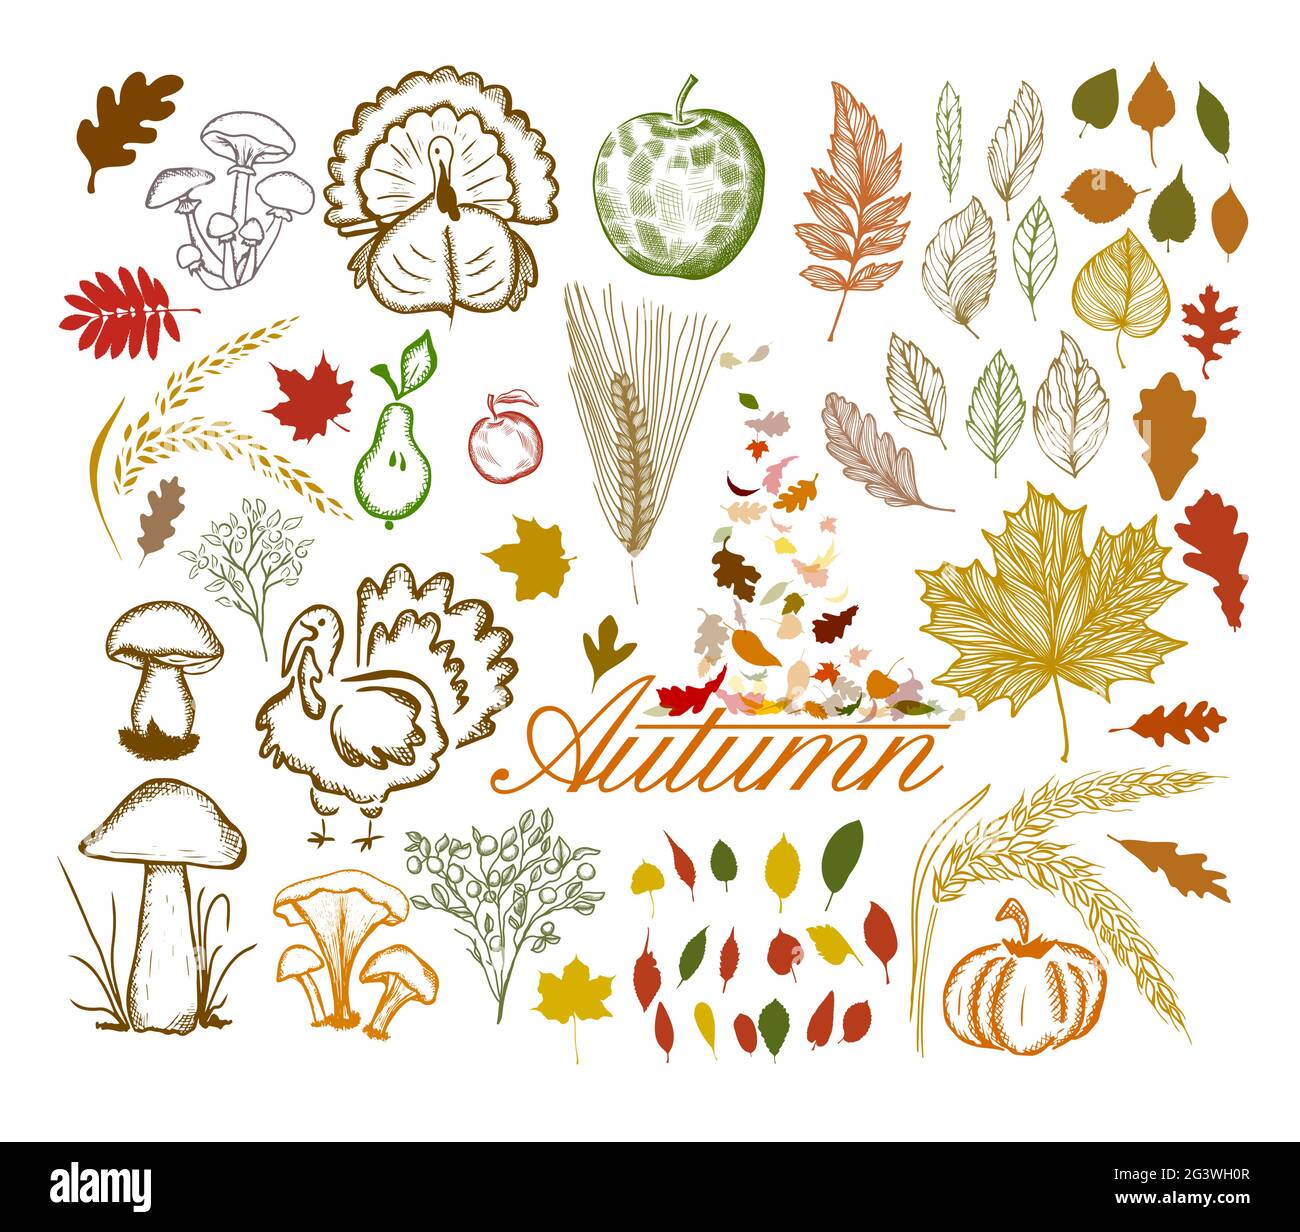 The cosy autumnal crossword